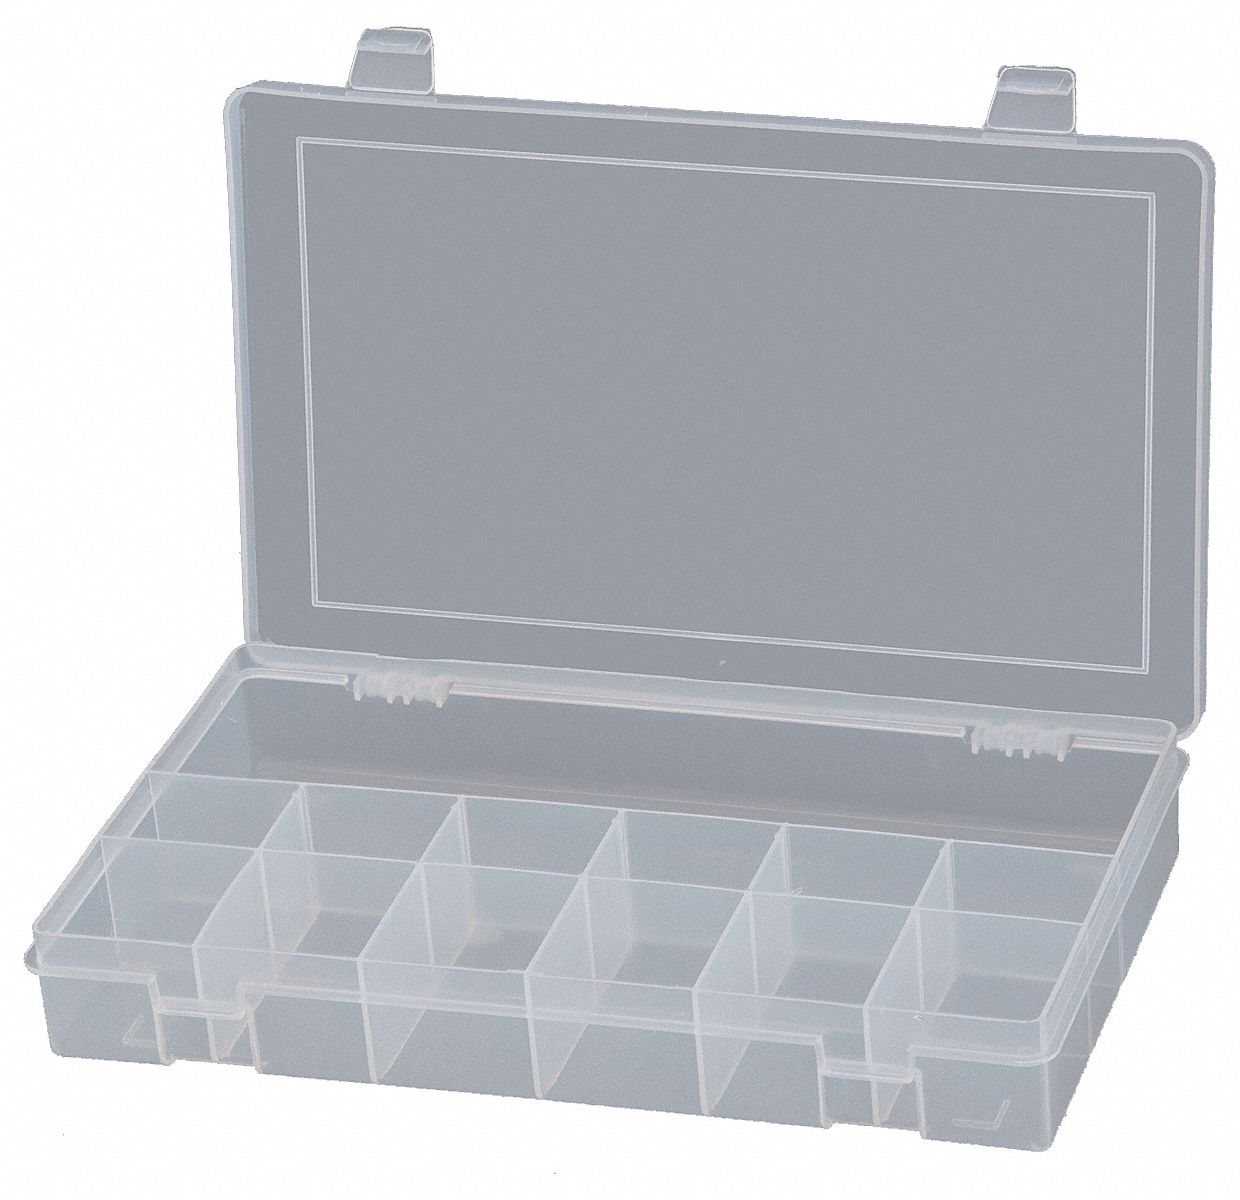 15V203 - Compartment Box 13 Compartments Clear